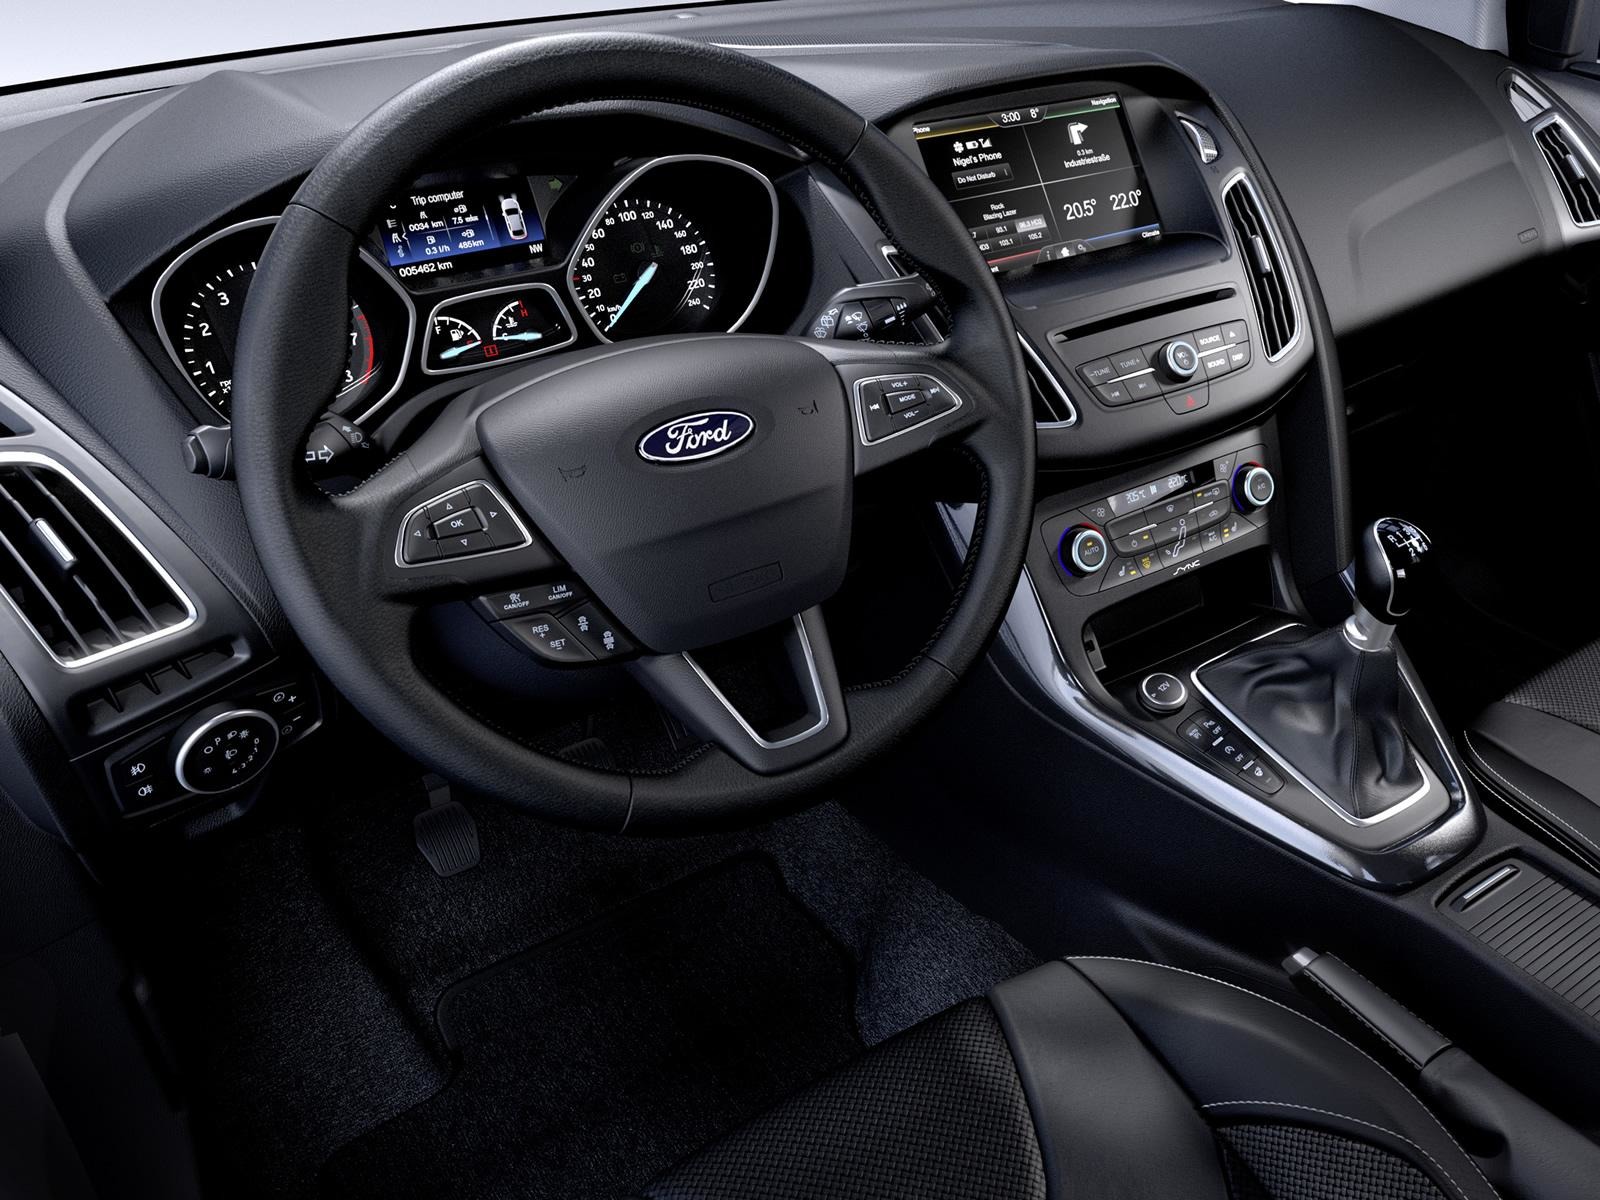 Ford focus manual transmission